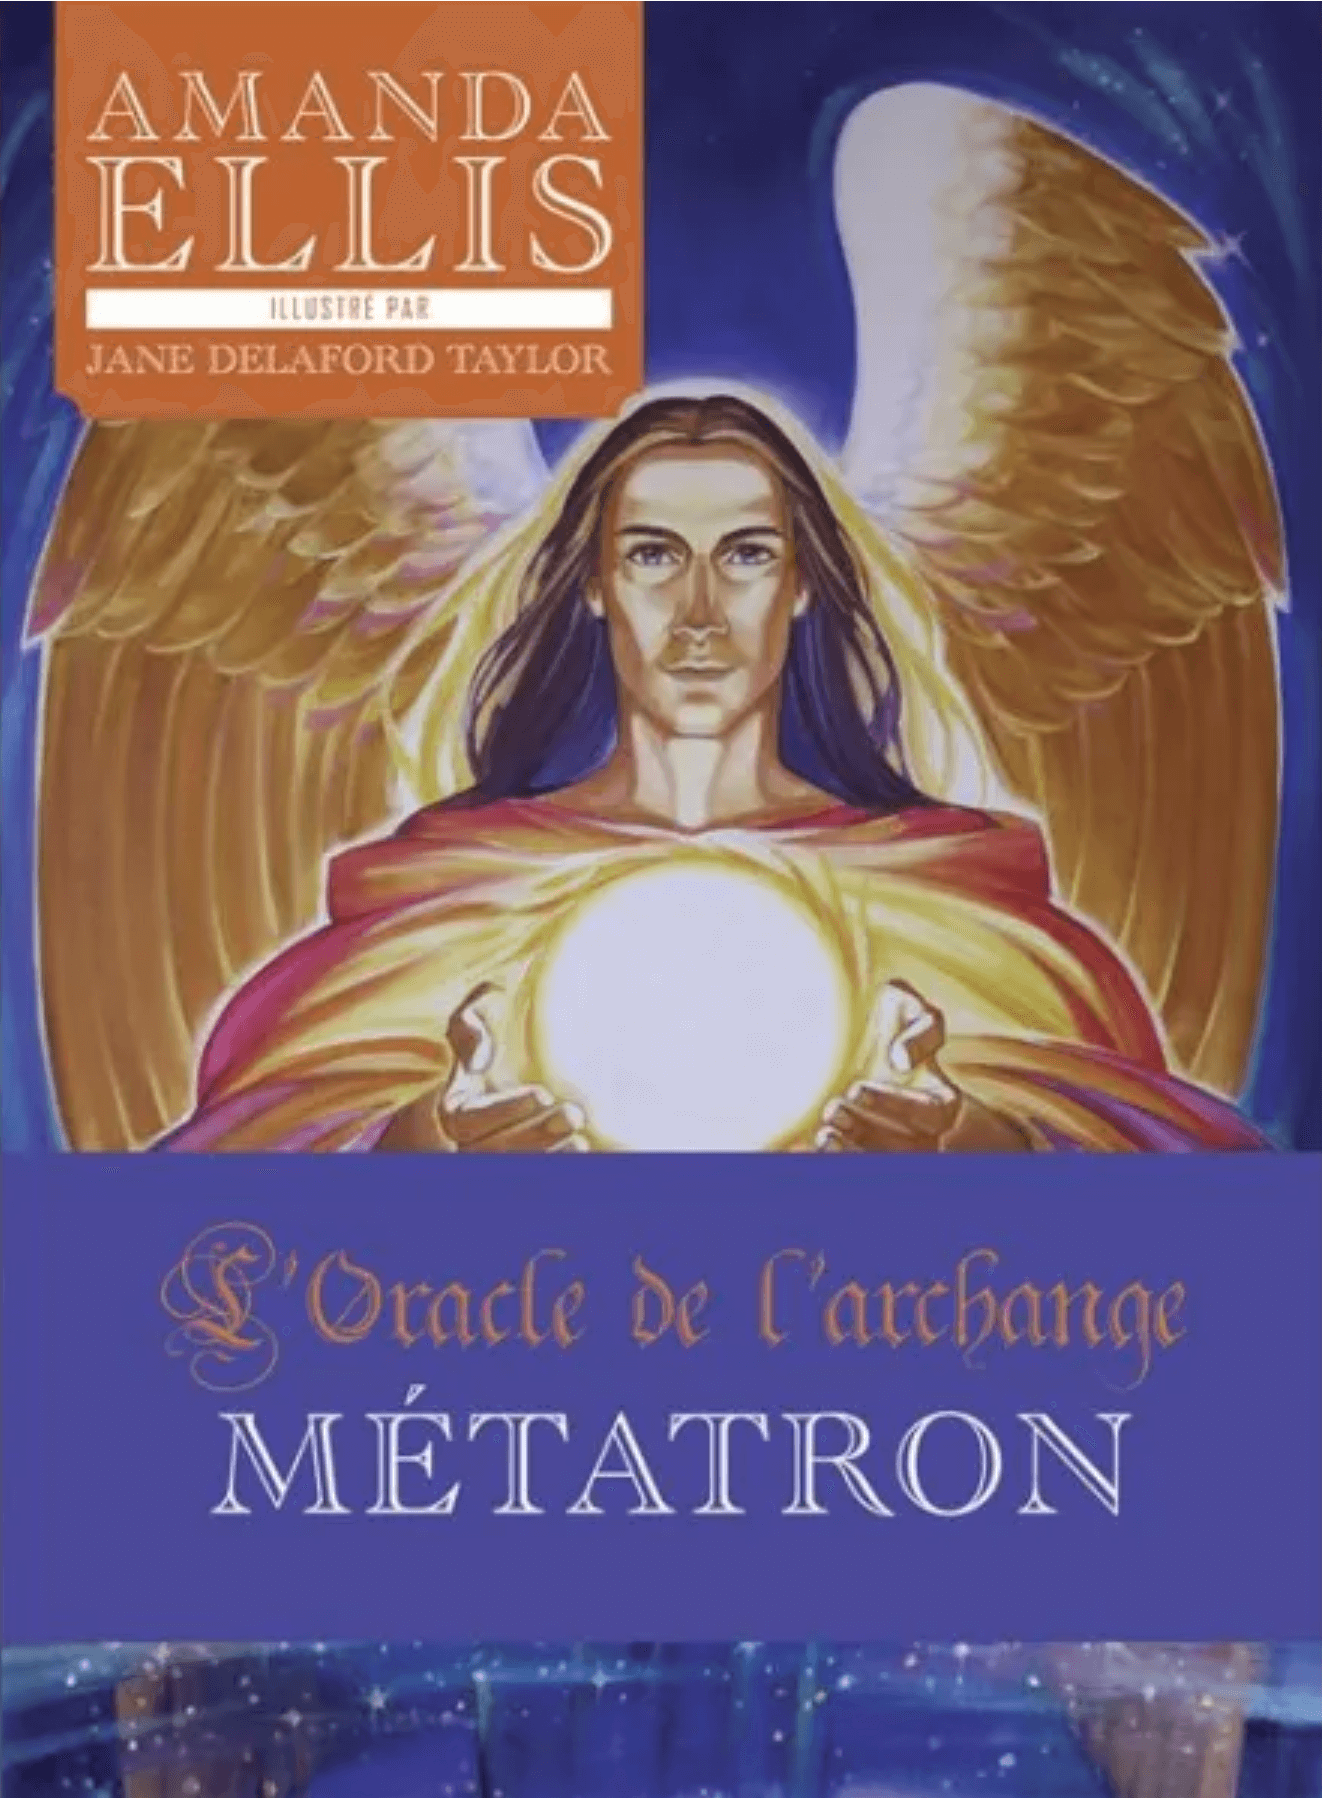 Oracle de Metatron